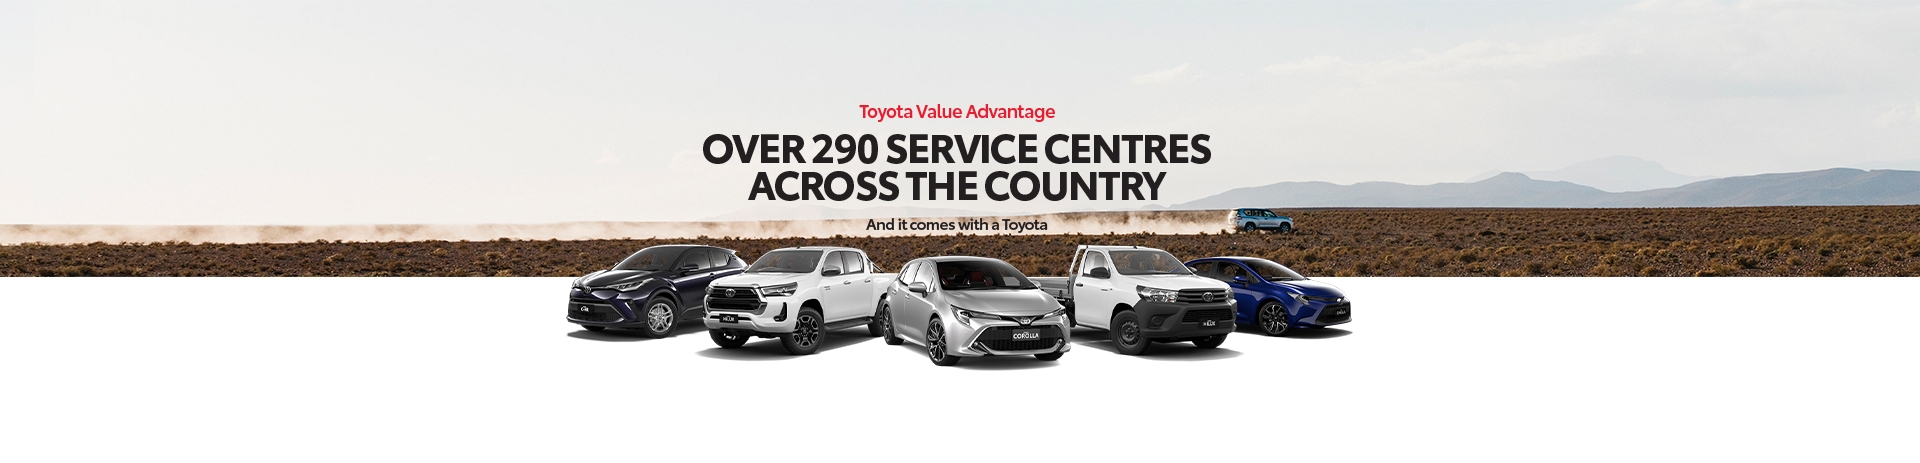 Toyota_Value_Advantage_Finance